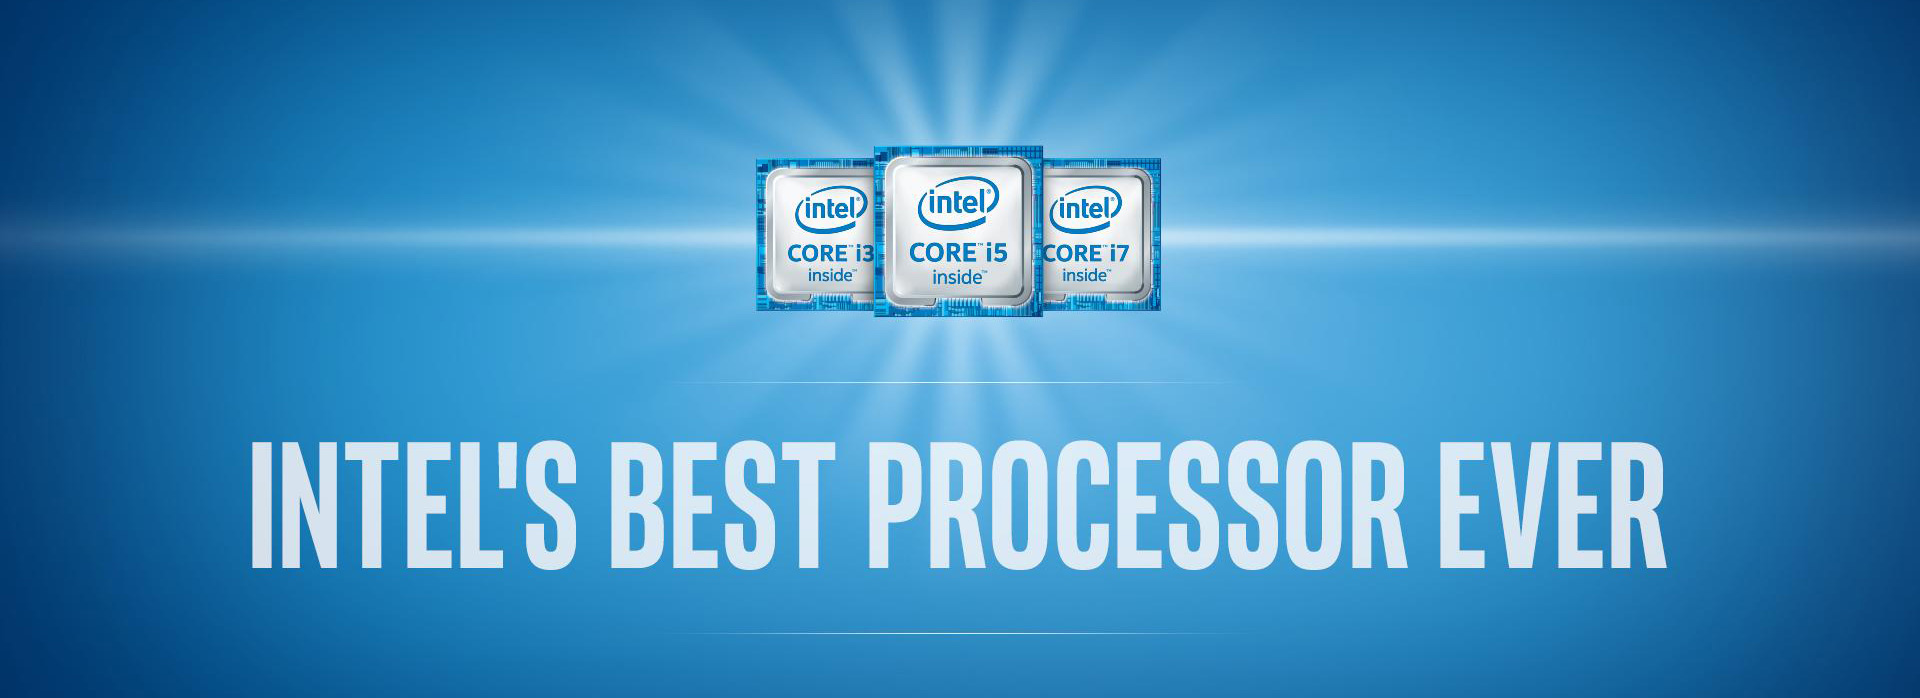 Intels Best Ever Processor